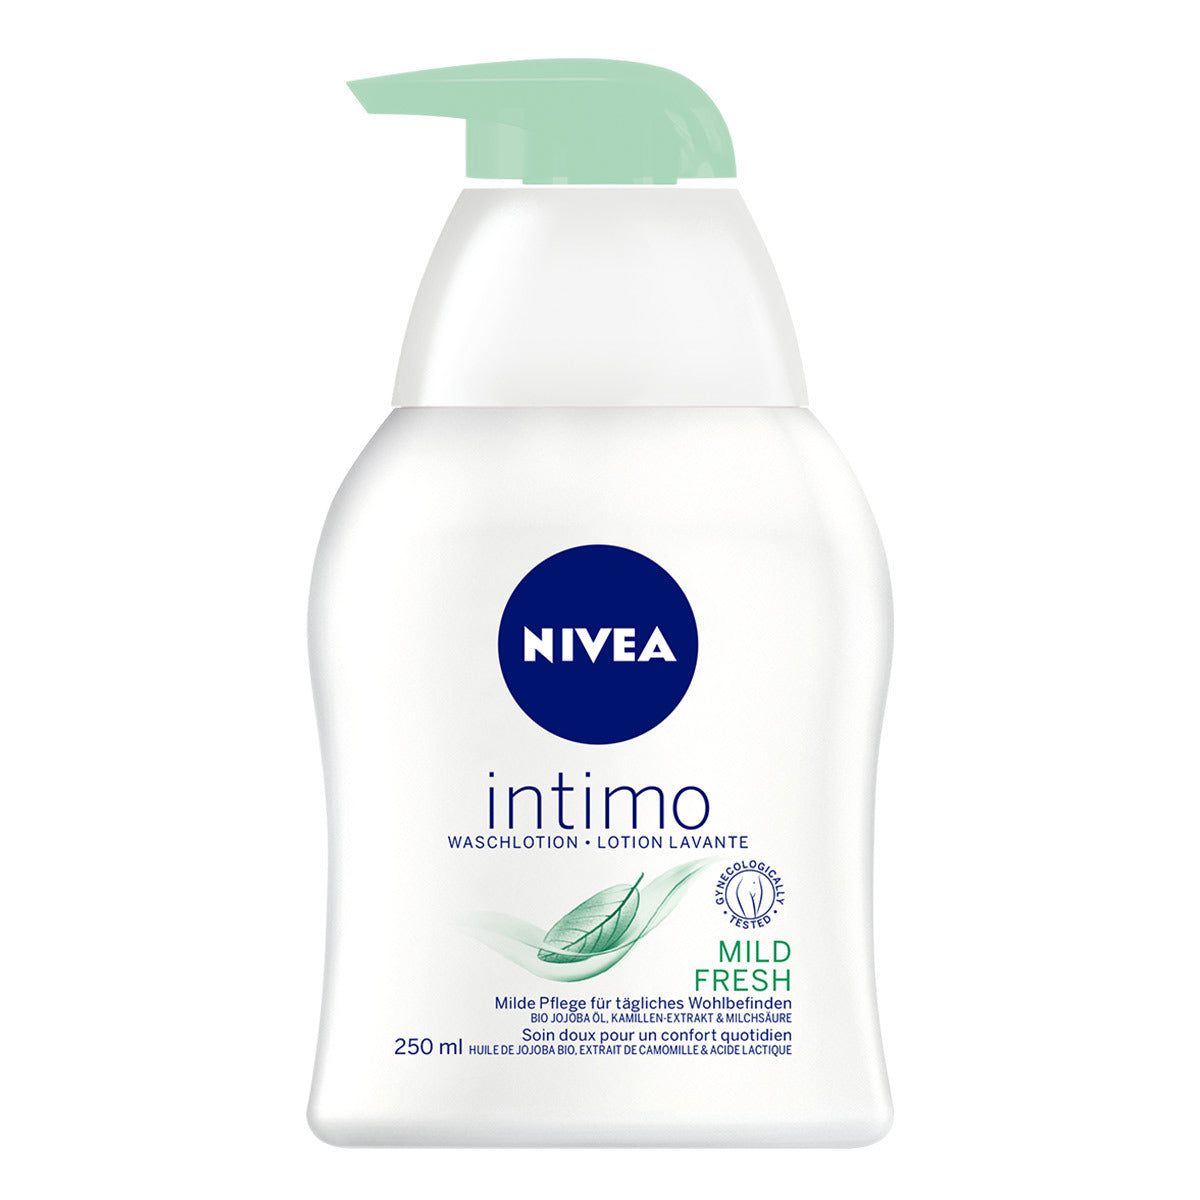 Primary image of Nivea Intimo Body Wash (Waschlotion)